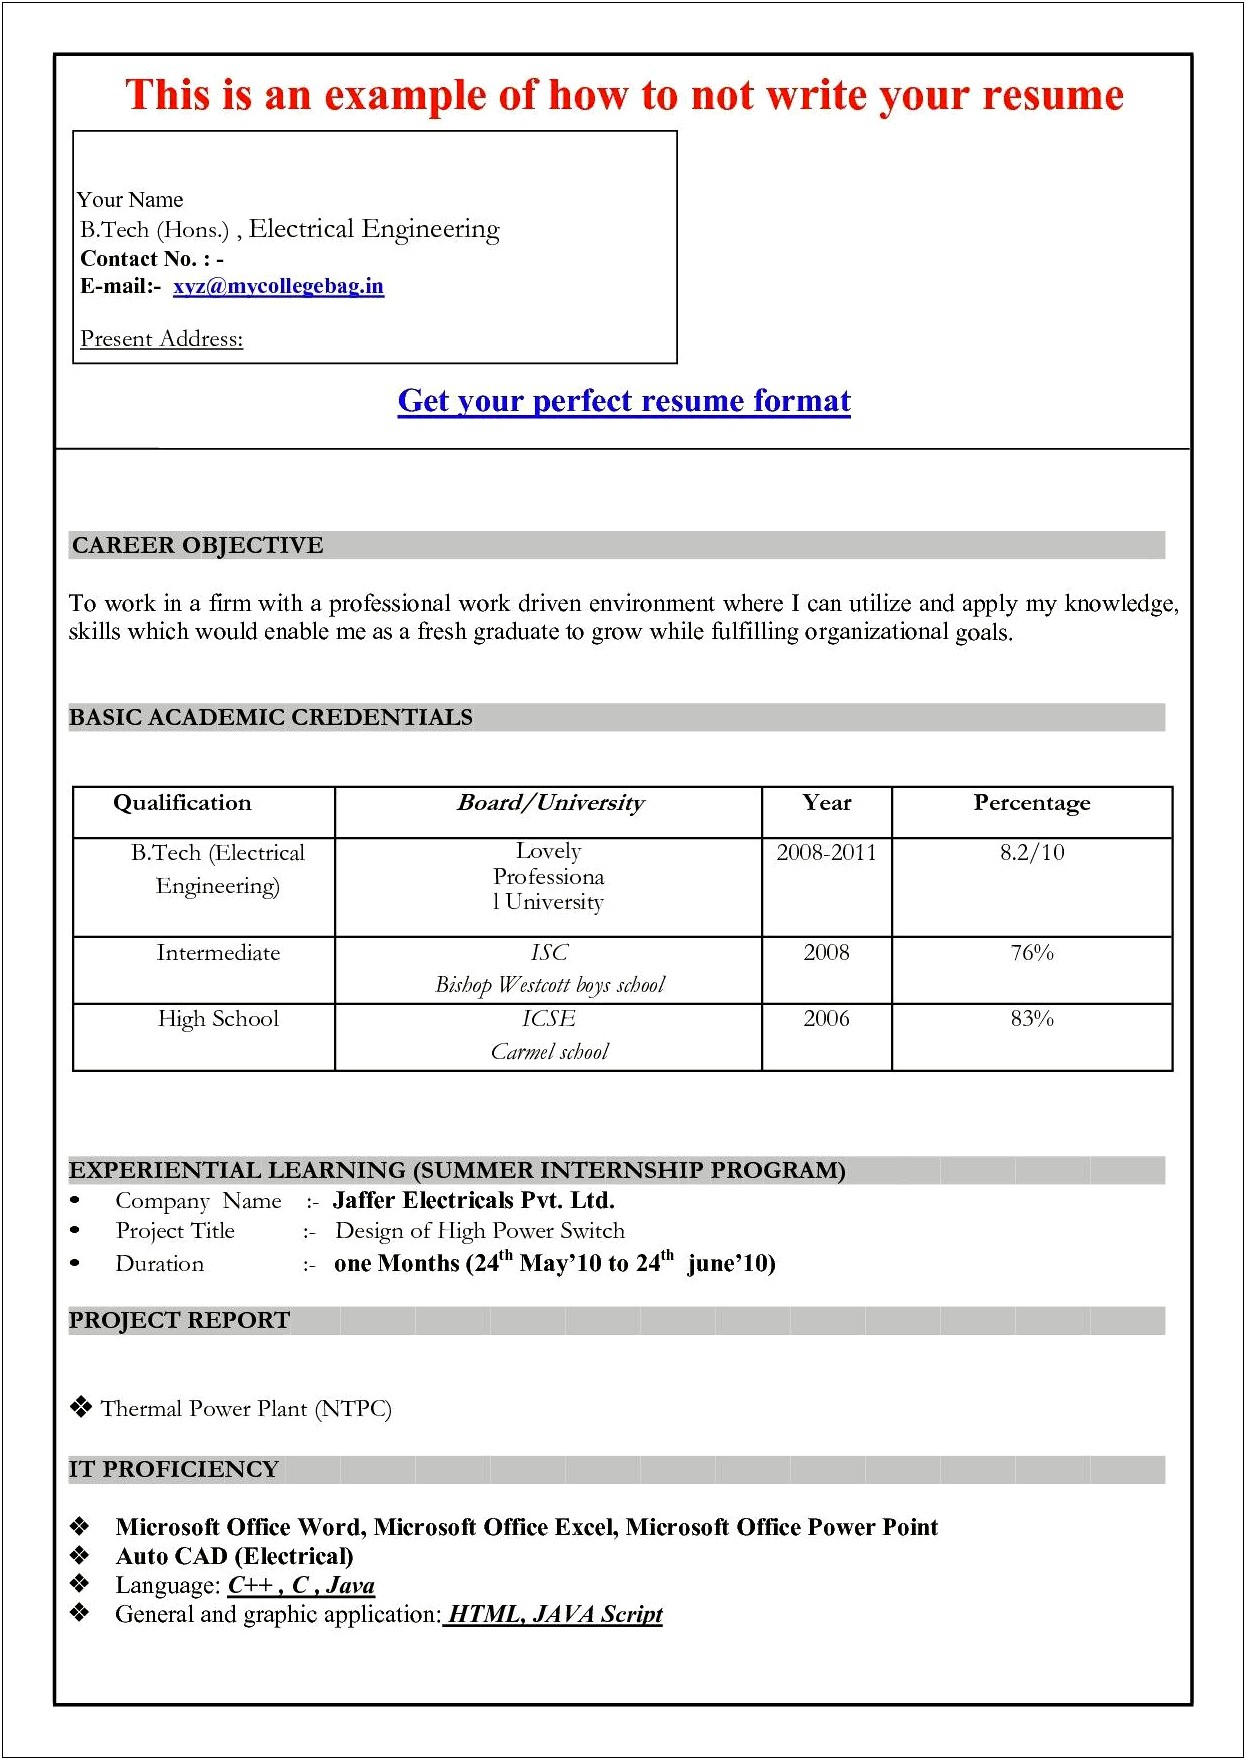 Resume Format Ms Word 2007 Download